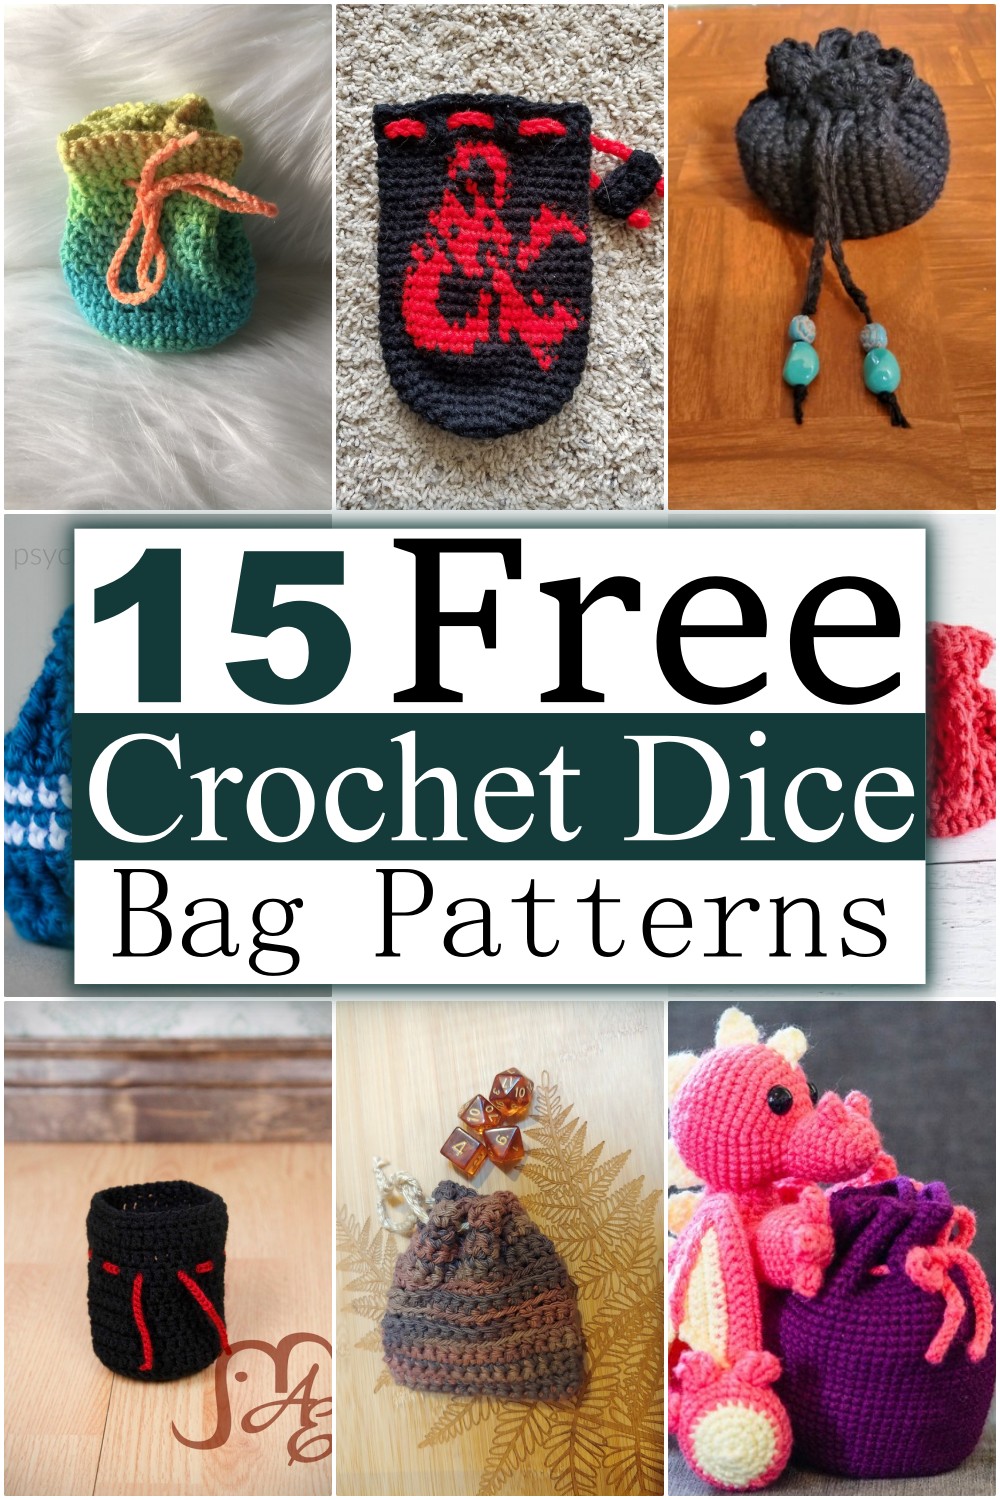 Crochet Dice Bag Patterns